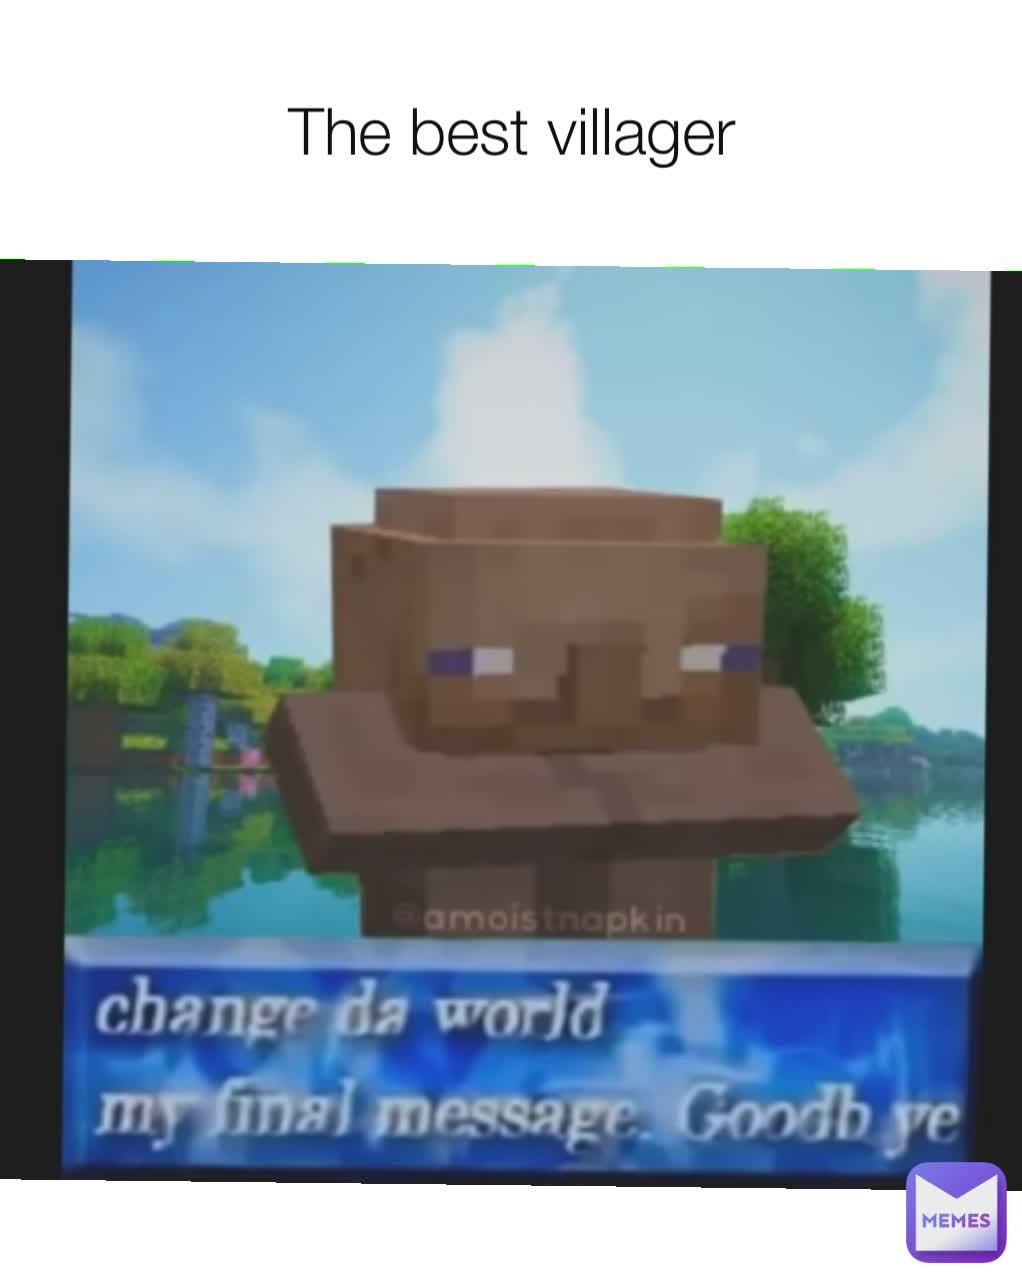 The best villager